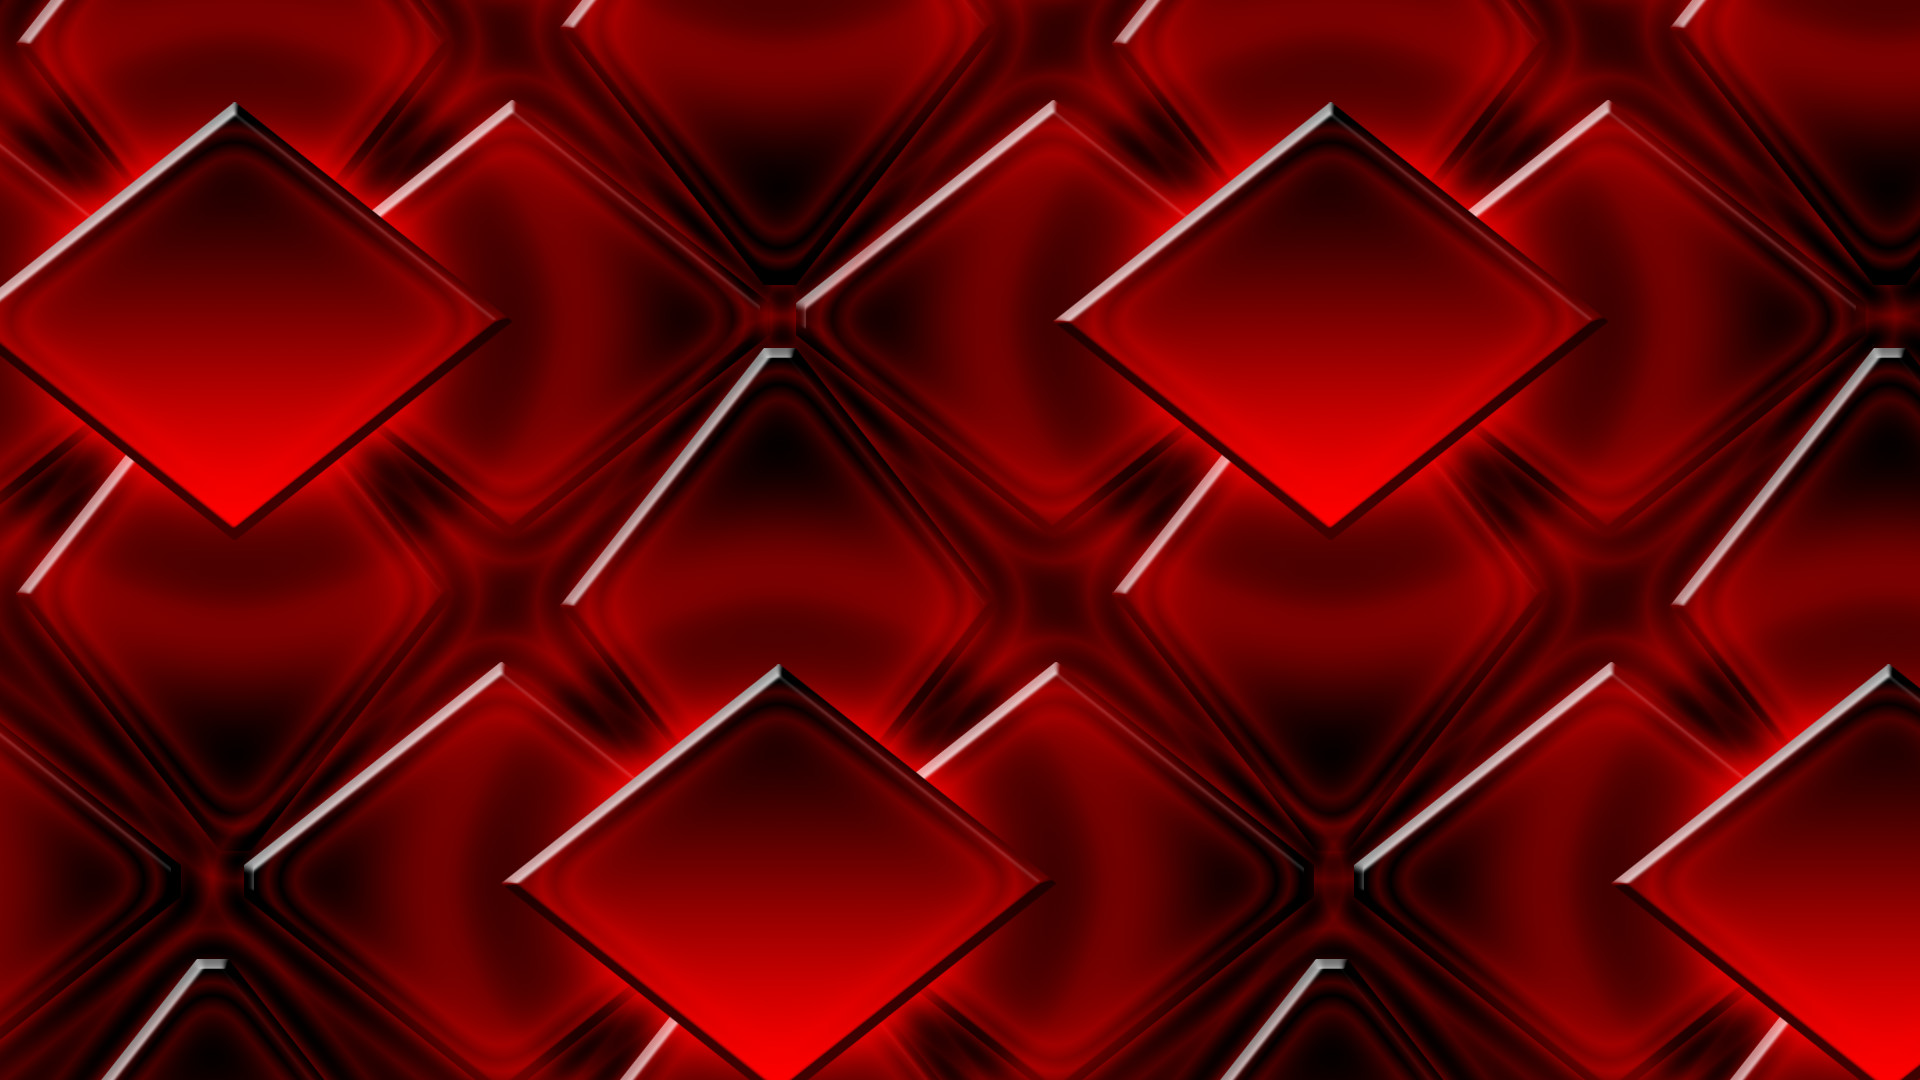 1920x1080 black_and_red_diamond_wallpaper_by_supergamerx-d4qzd1k.png